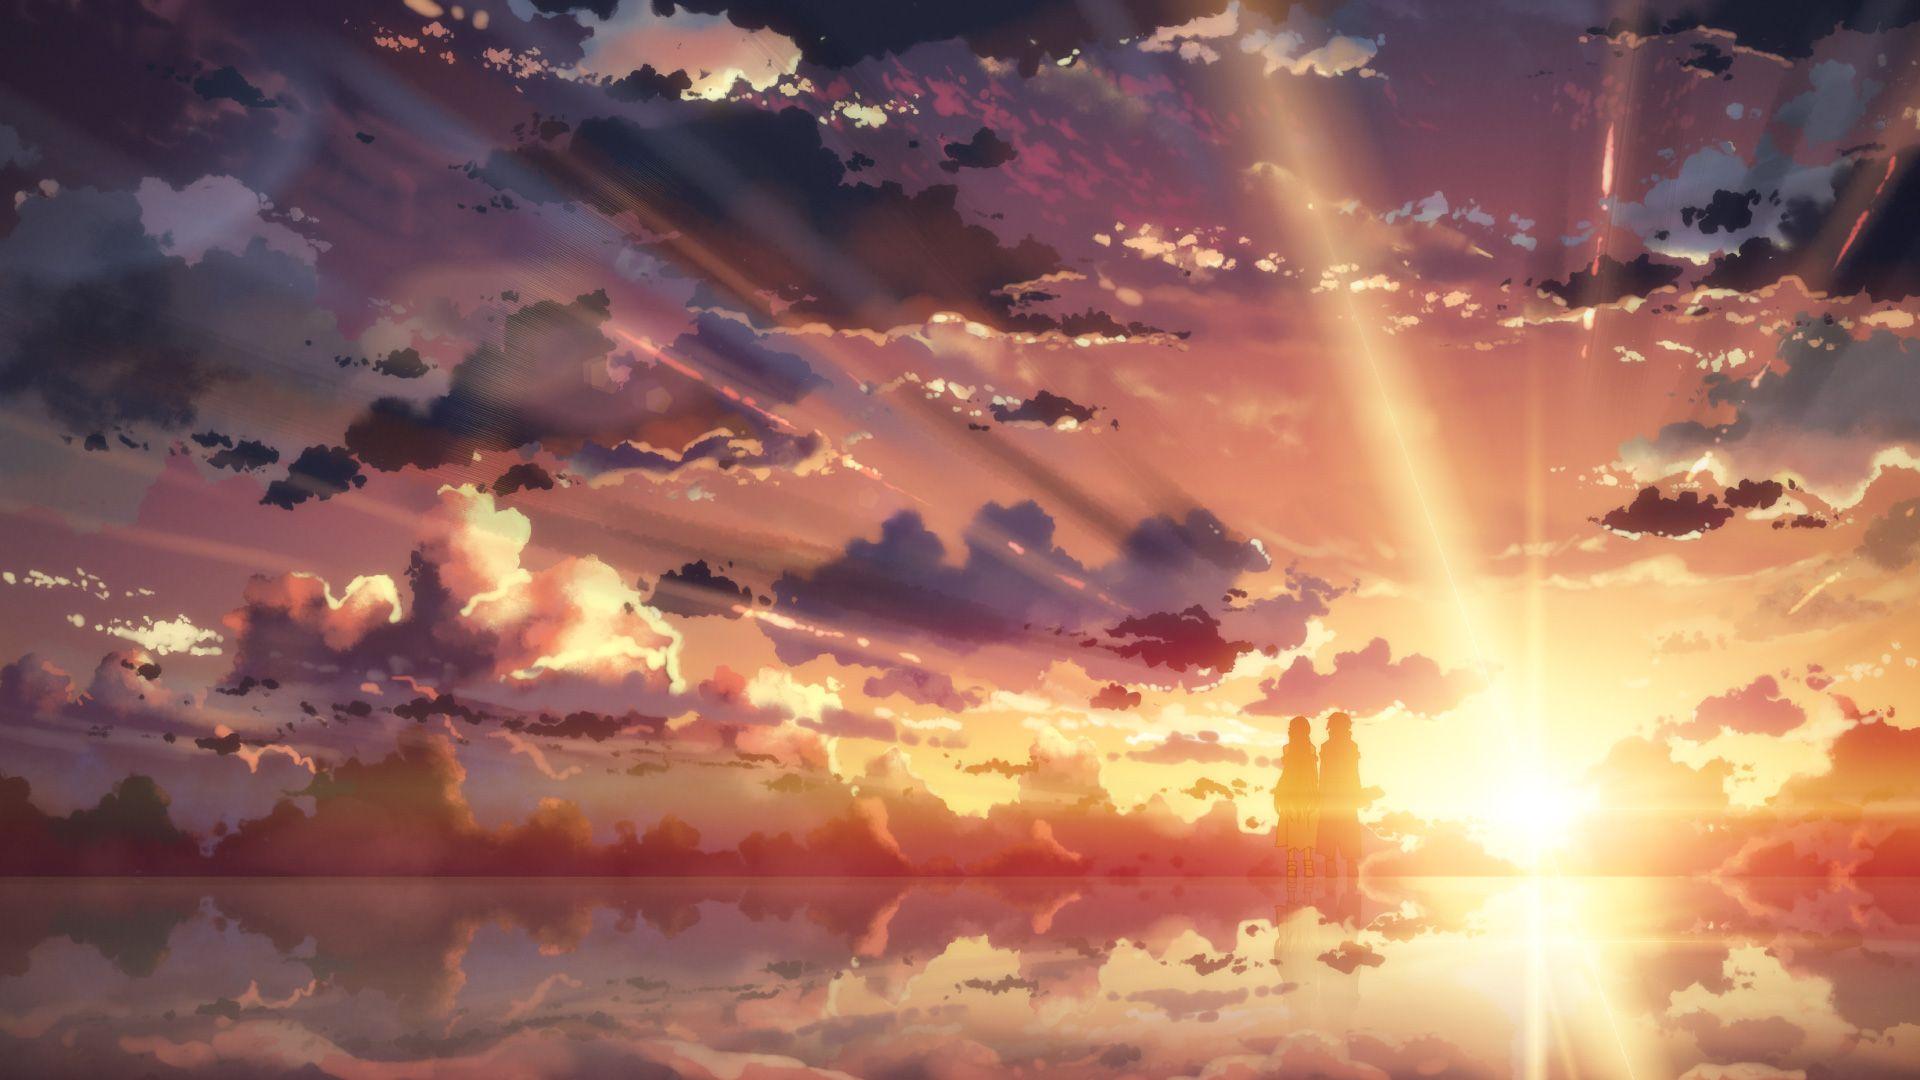 HD desktop wallpaper Anime Sunset Sky Field Cloud download free  picture 972564